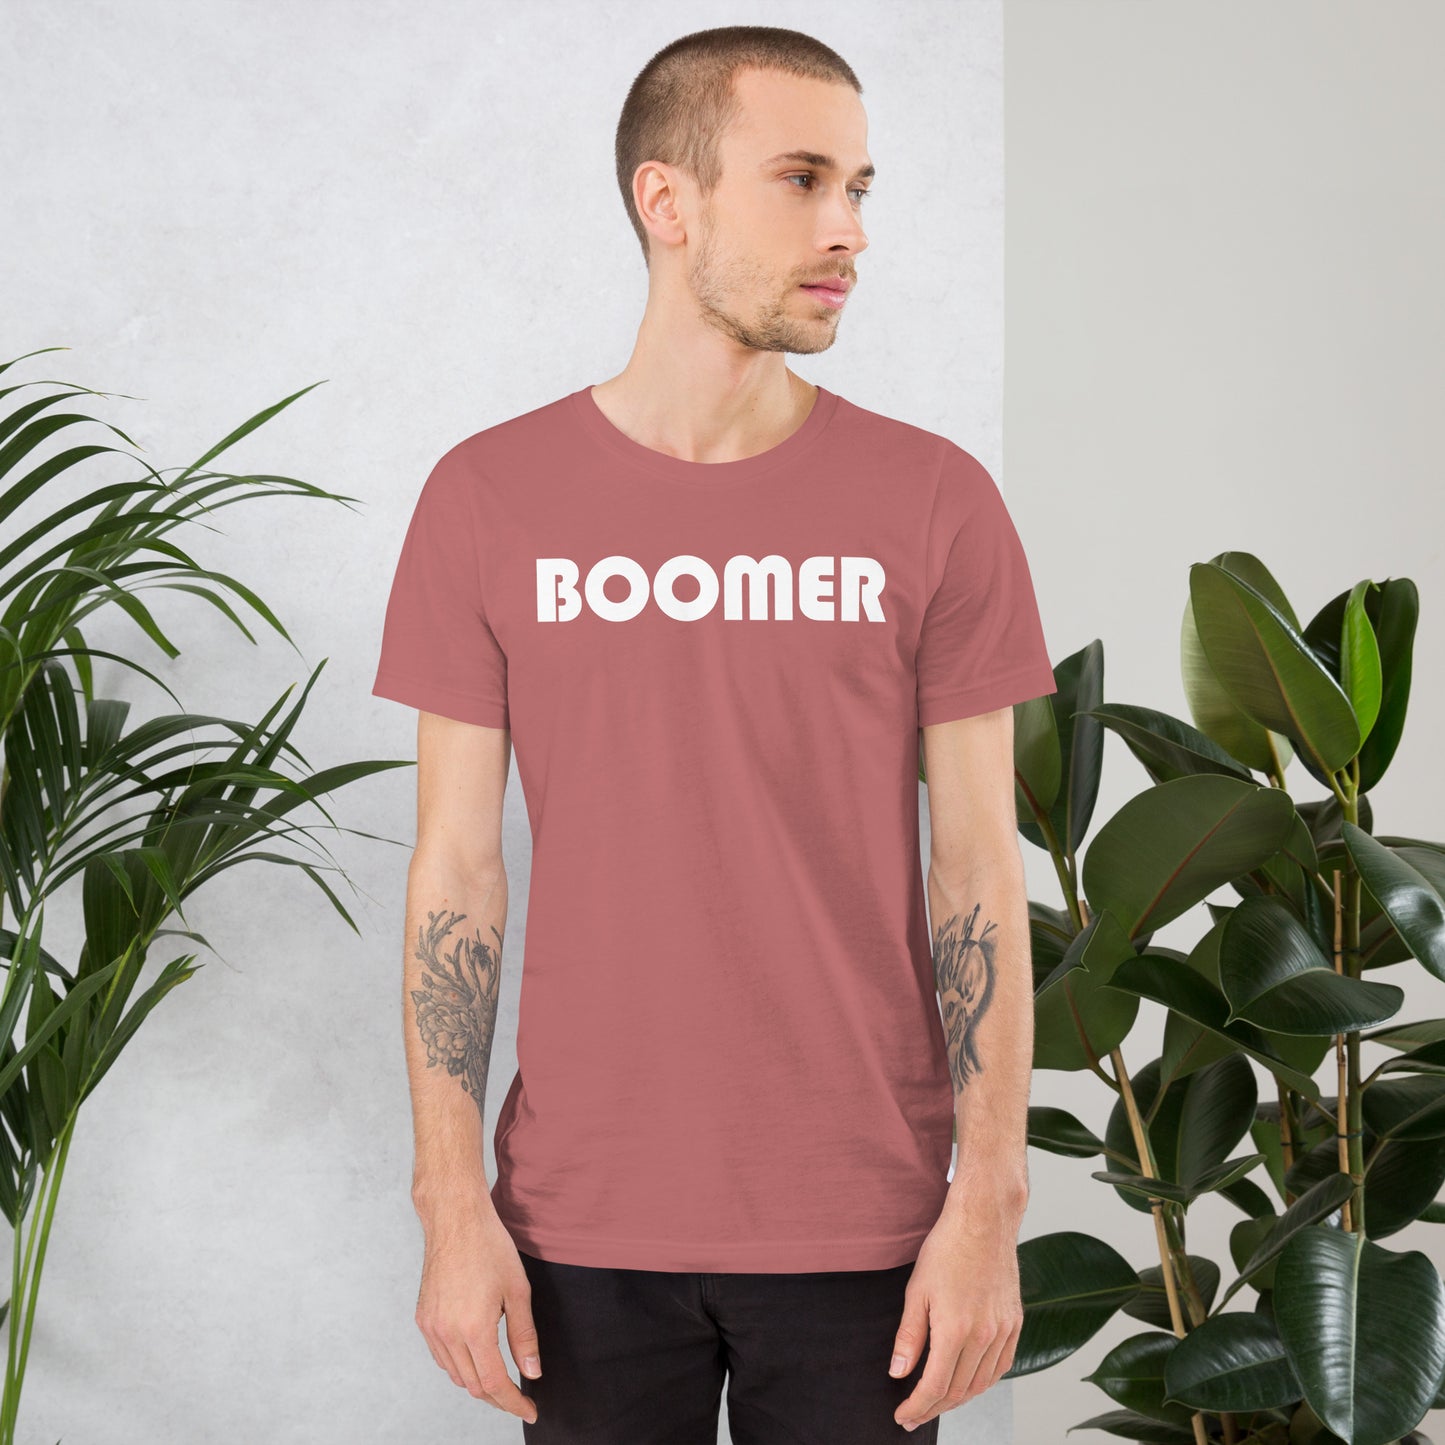 Boomer 70's t-shirt